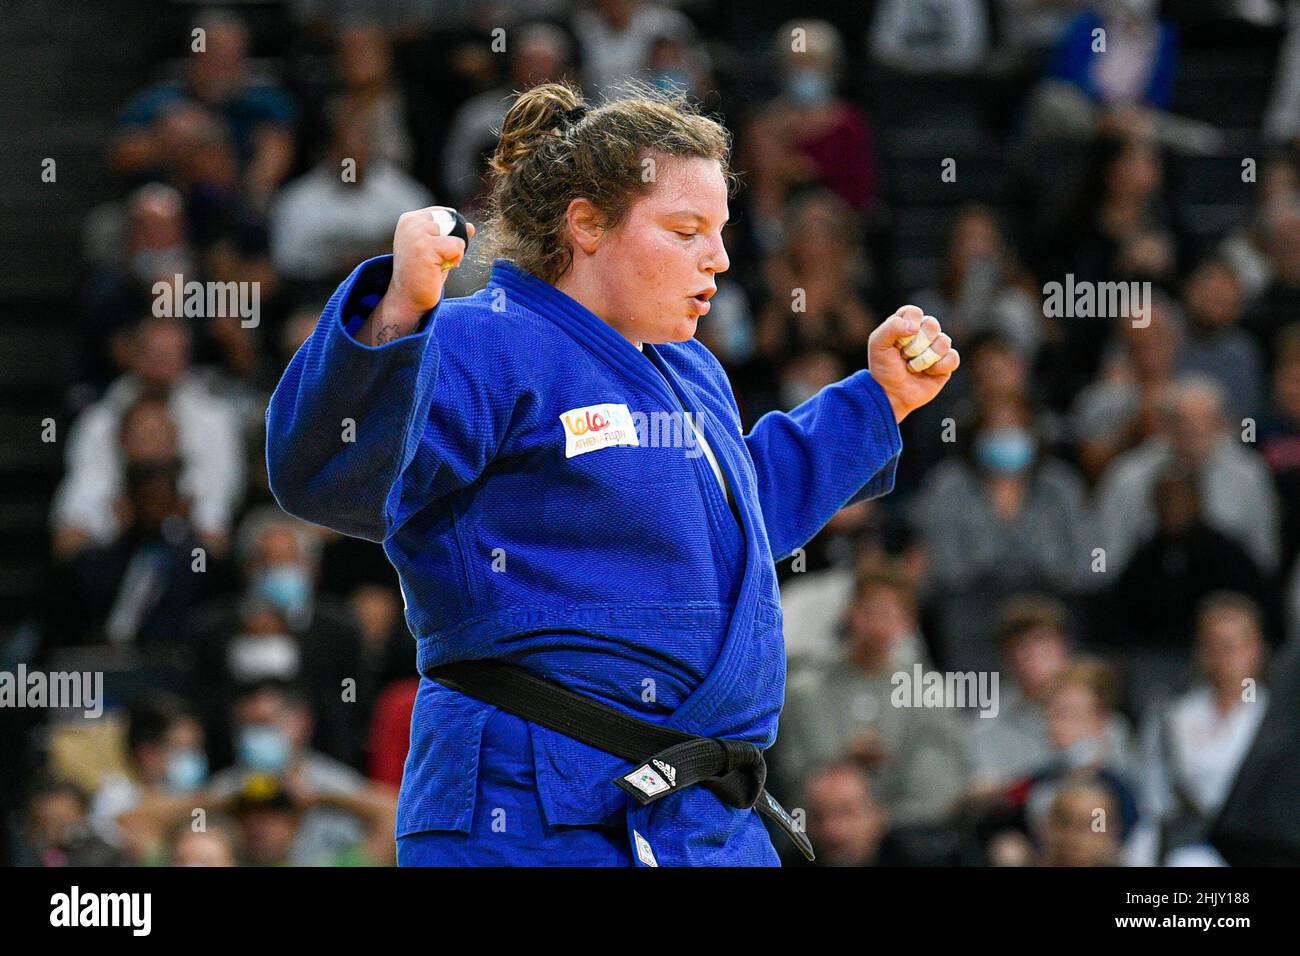 Women +78kg, Raz Rozalya HERSHKO of Israel gold medal celebrates during the Paris Grand Slam 2021, Judo event on October 17, 2021 at AccorHotels Arena Stock Photo